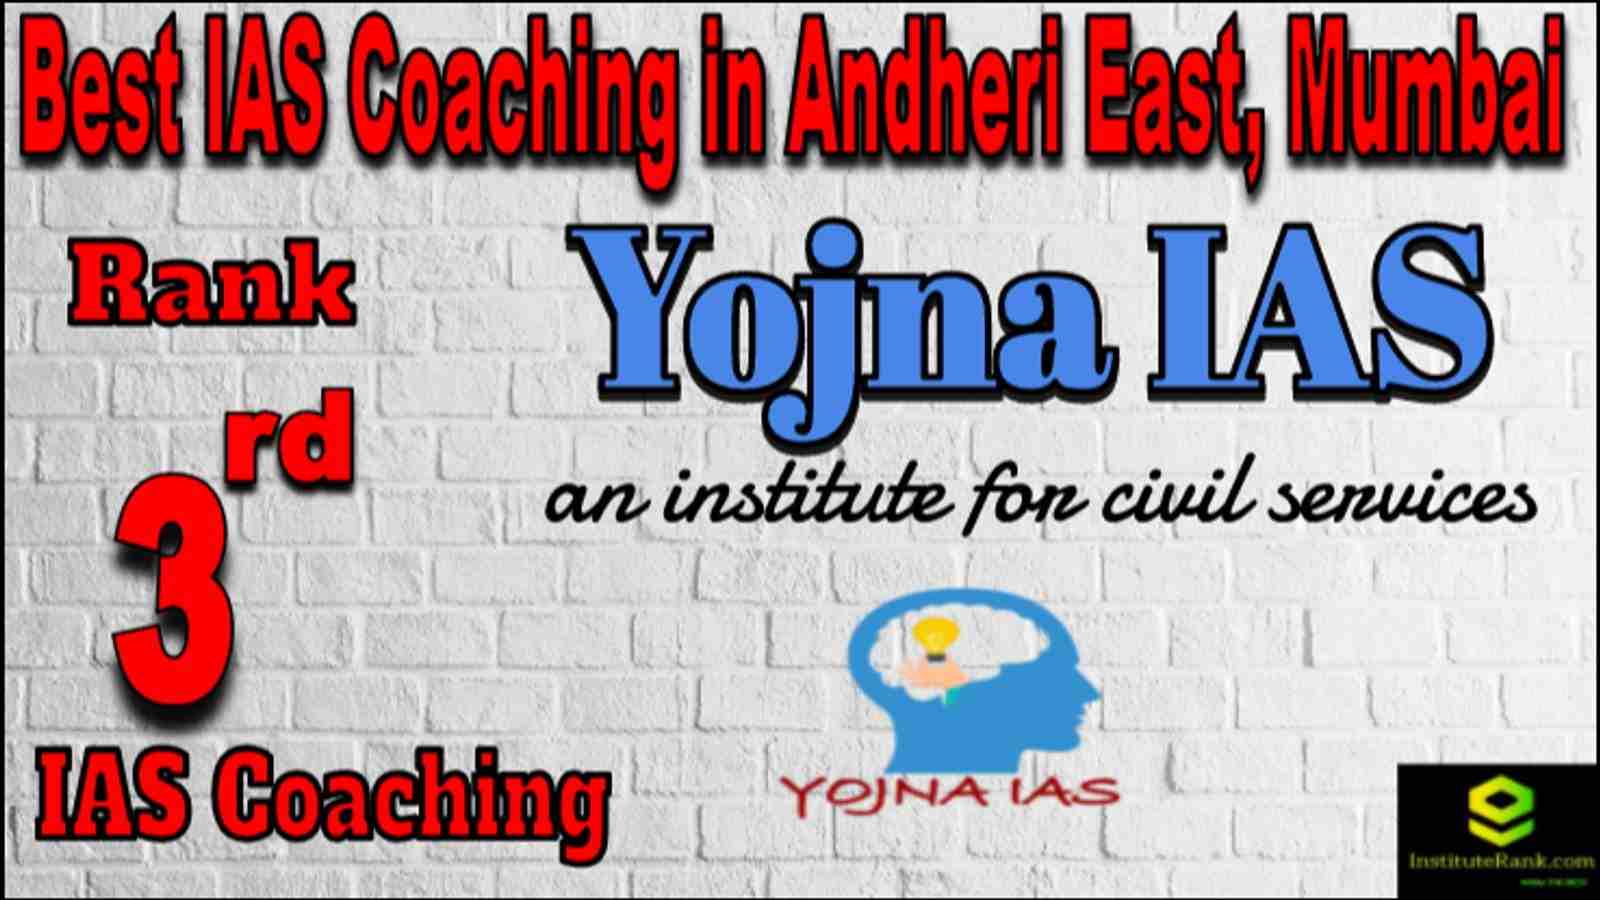 Rank 3 Best IAS coaching in Andheri East, Mumbai